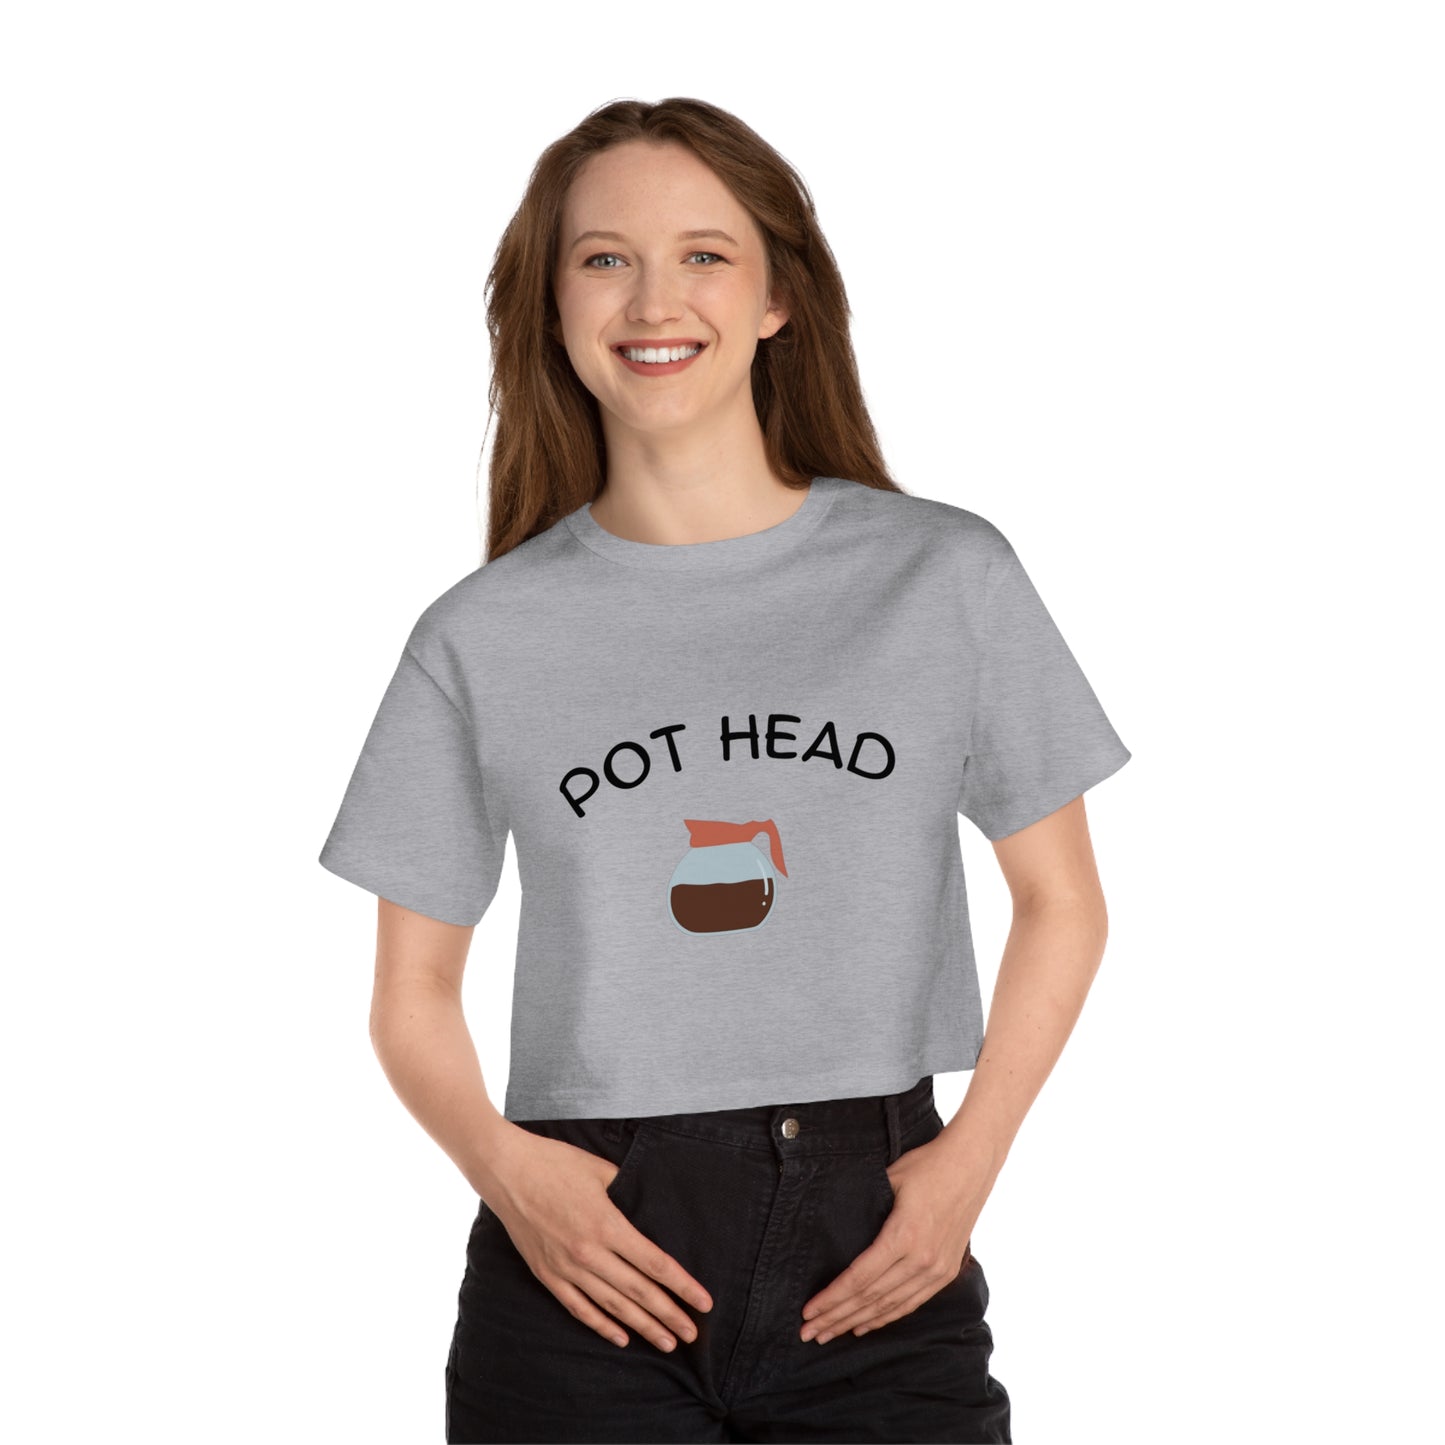 "Pot Head" - Champion crop top